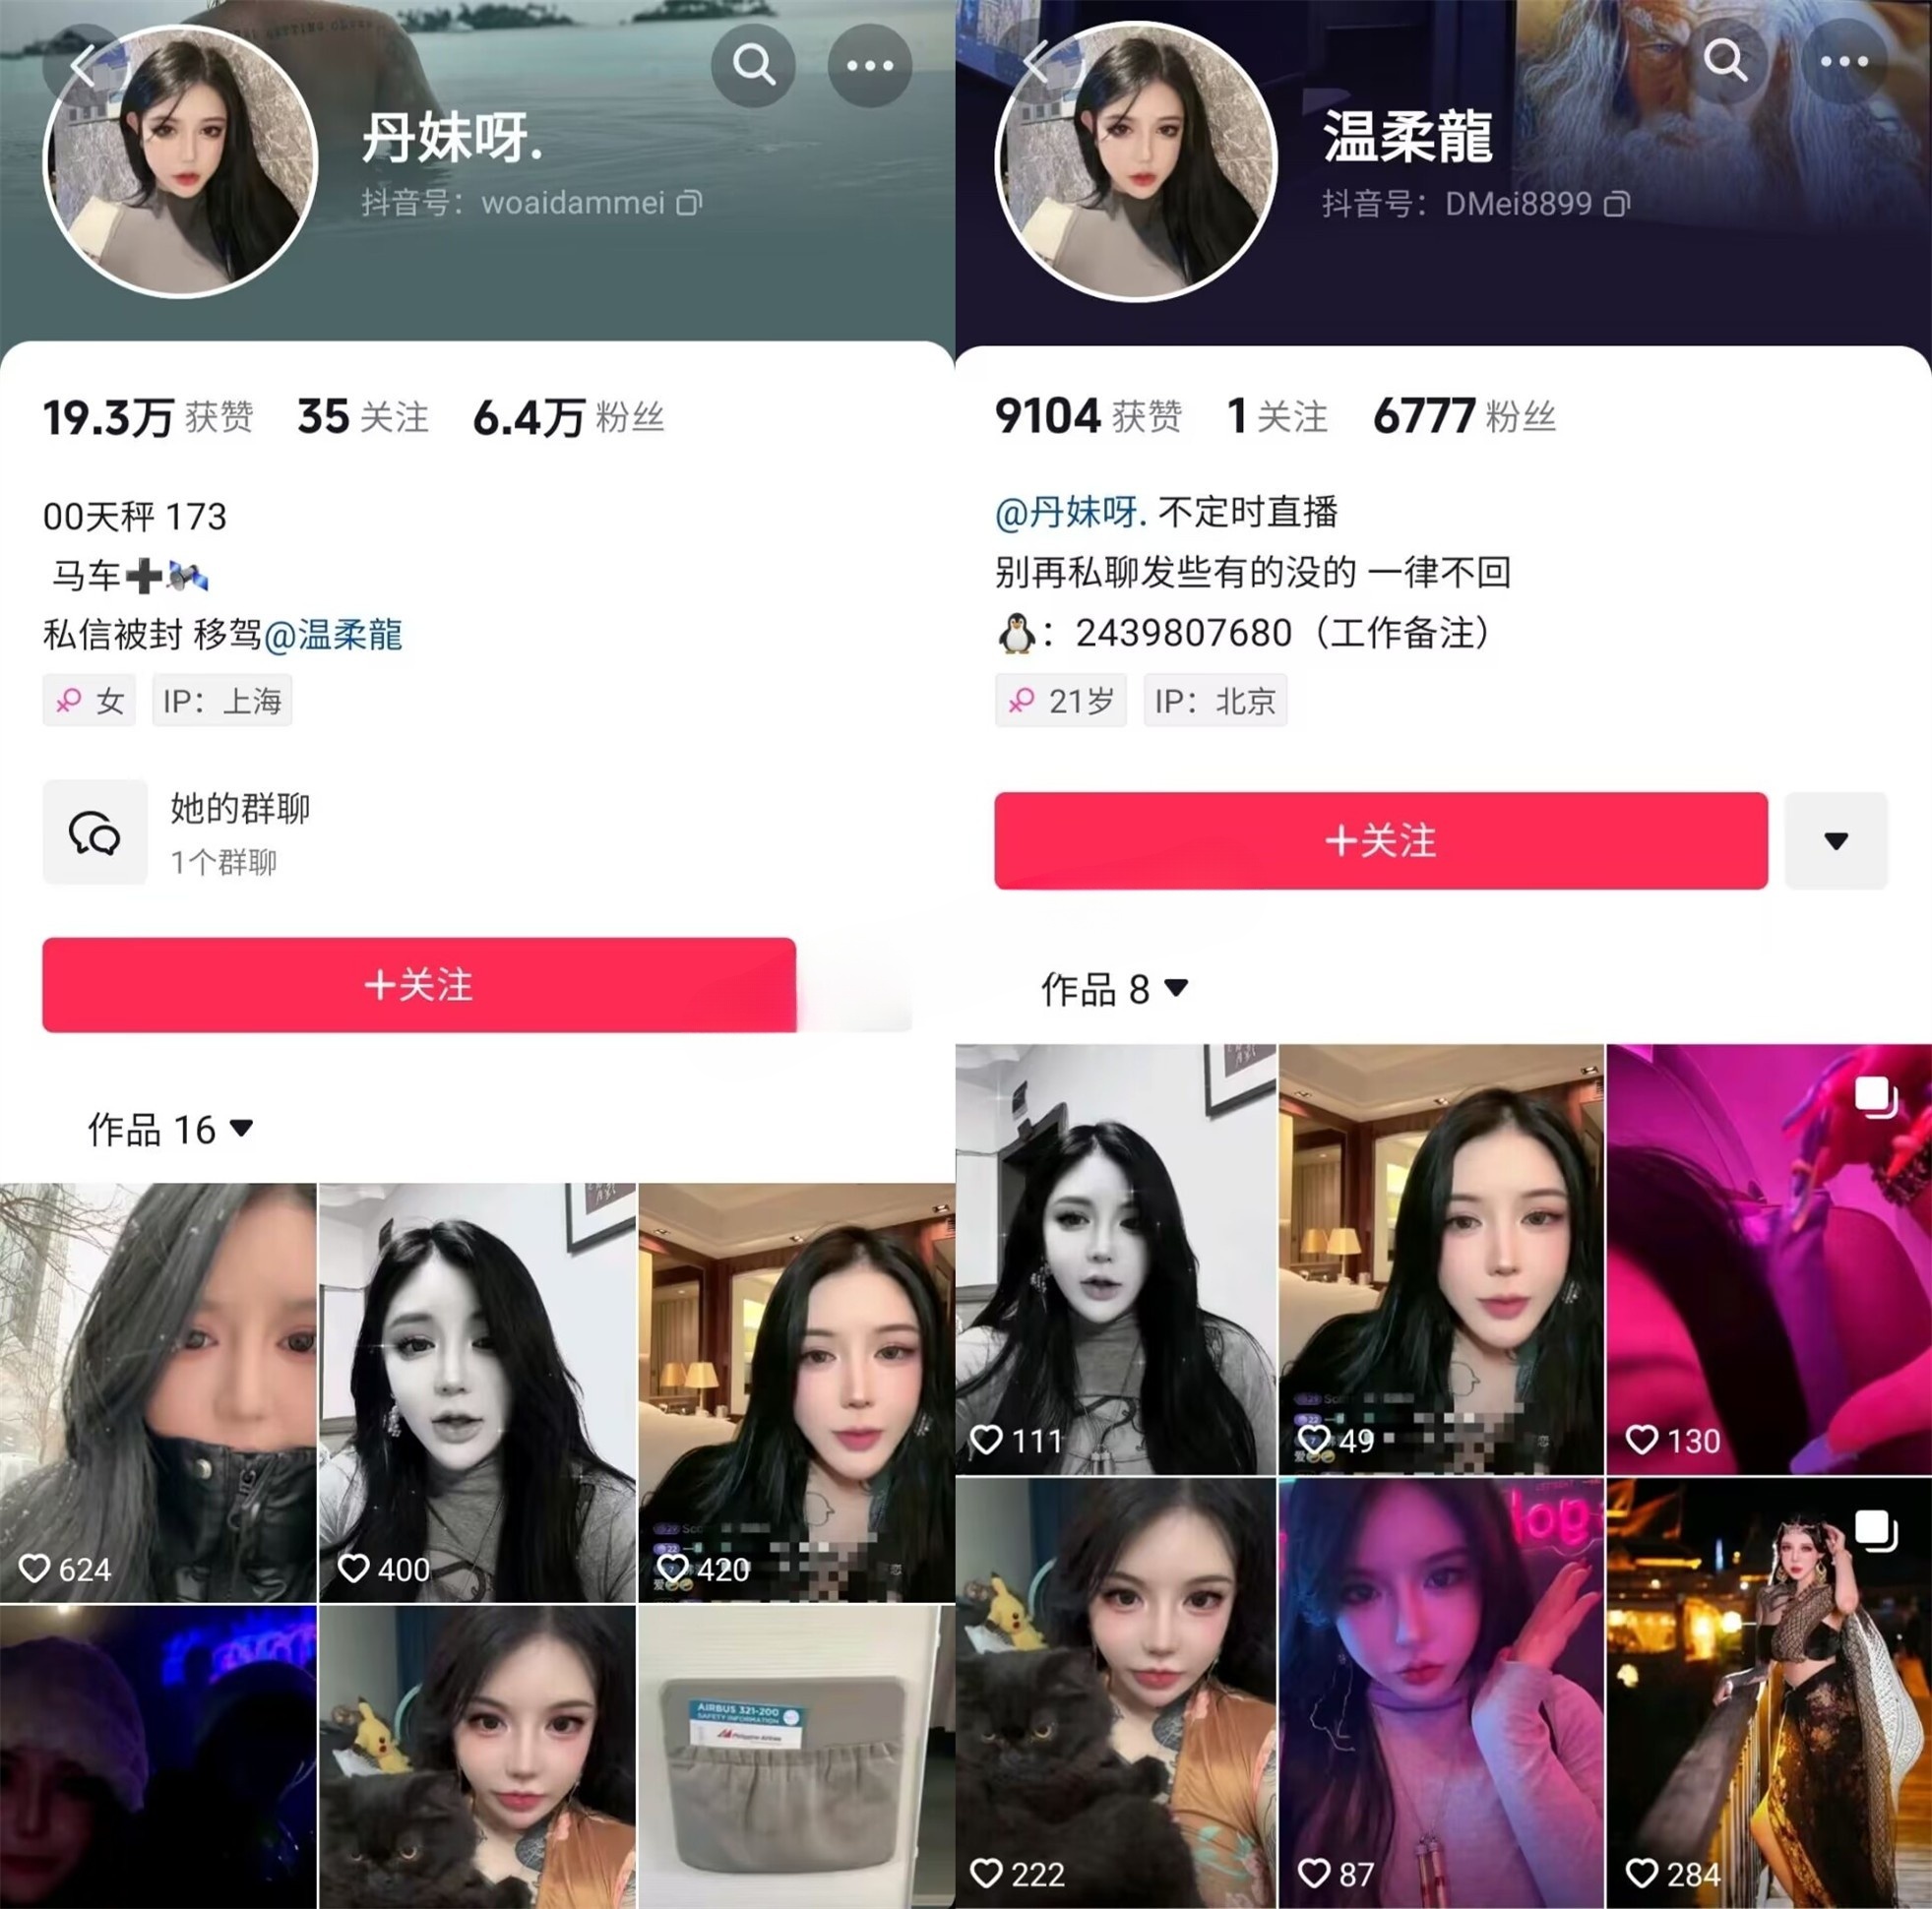 Douyin Weibo有名人「Dan Mei Ya」トップタトゥー美女の3Pセックスが流出